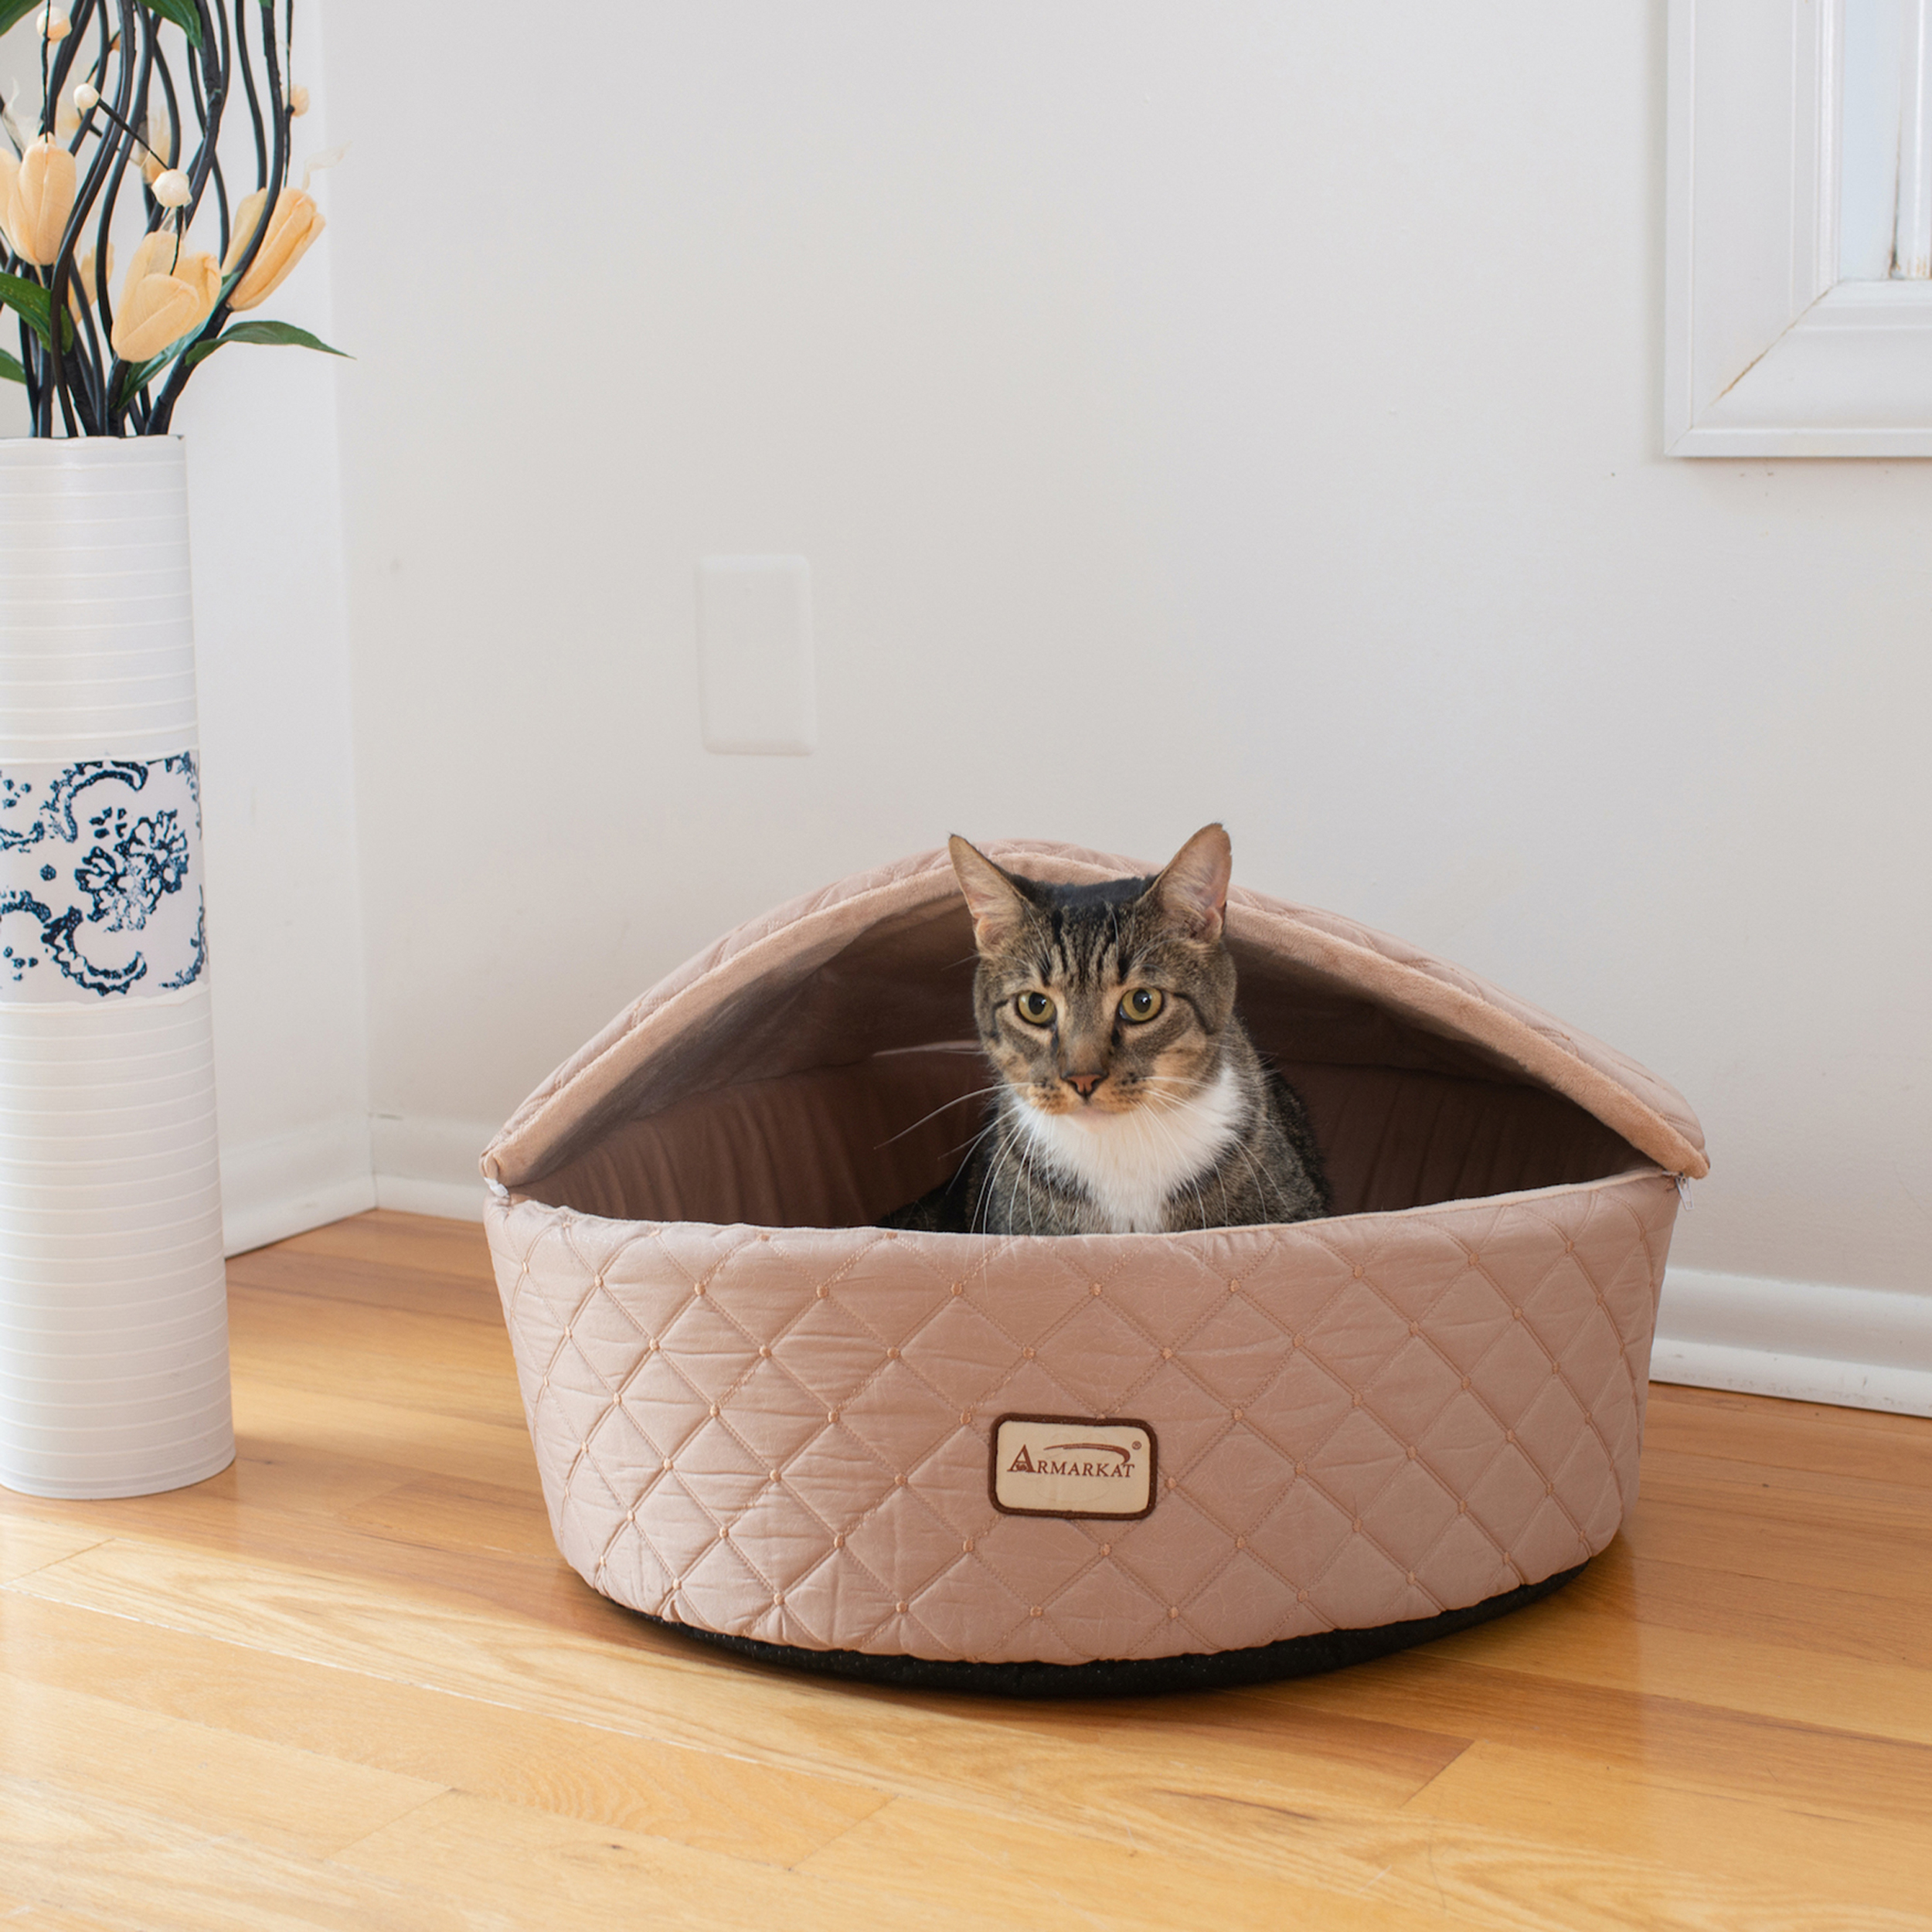 Armarkat Cat Bed, Medium, Light Apricot, C33HFS/FS-M - image 1 of 6